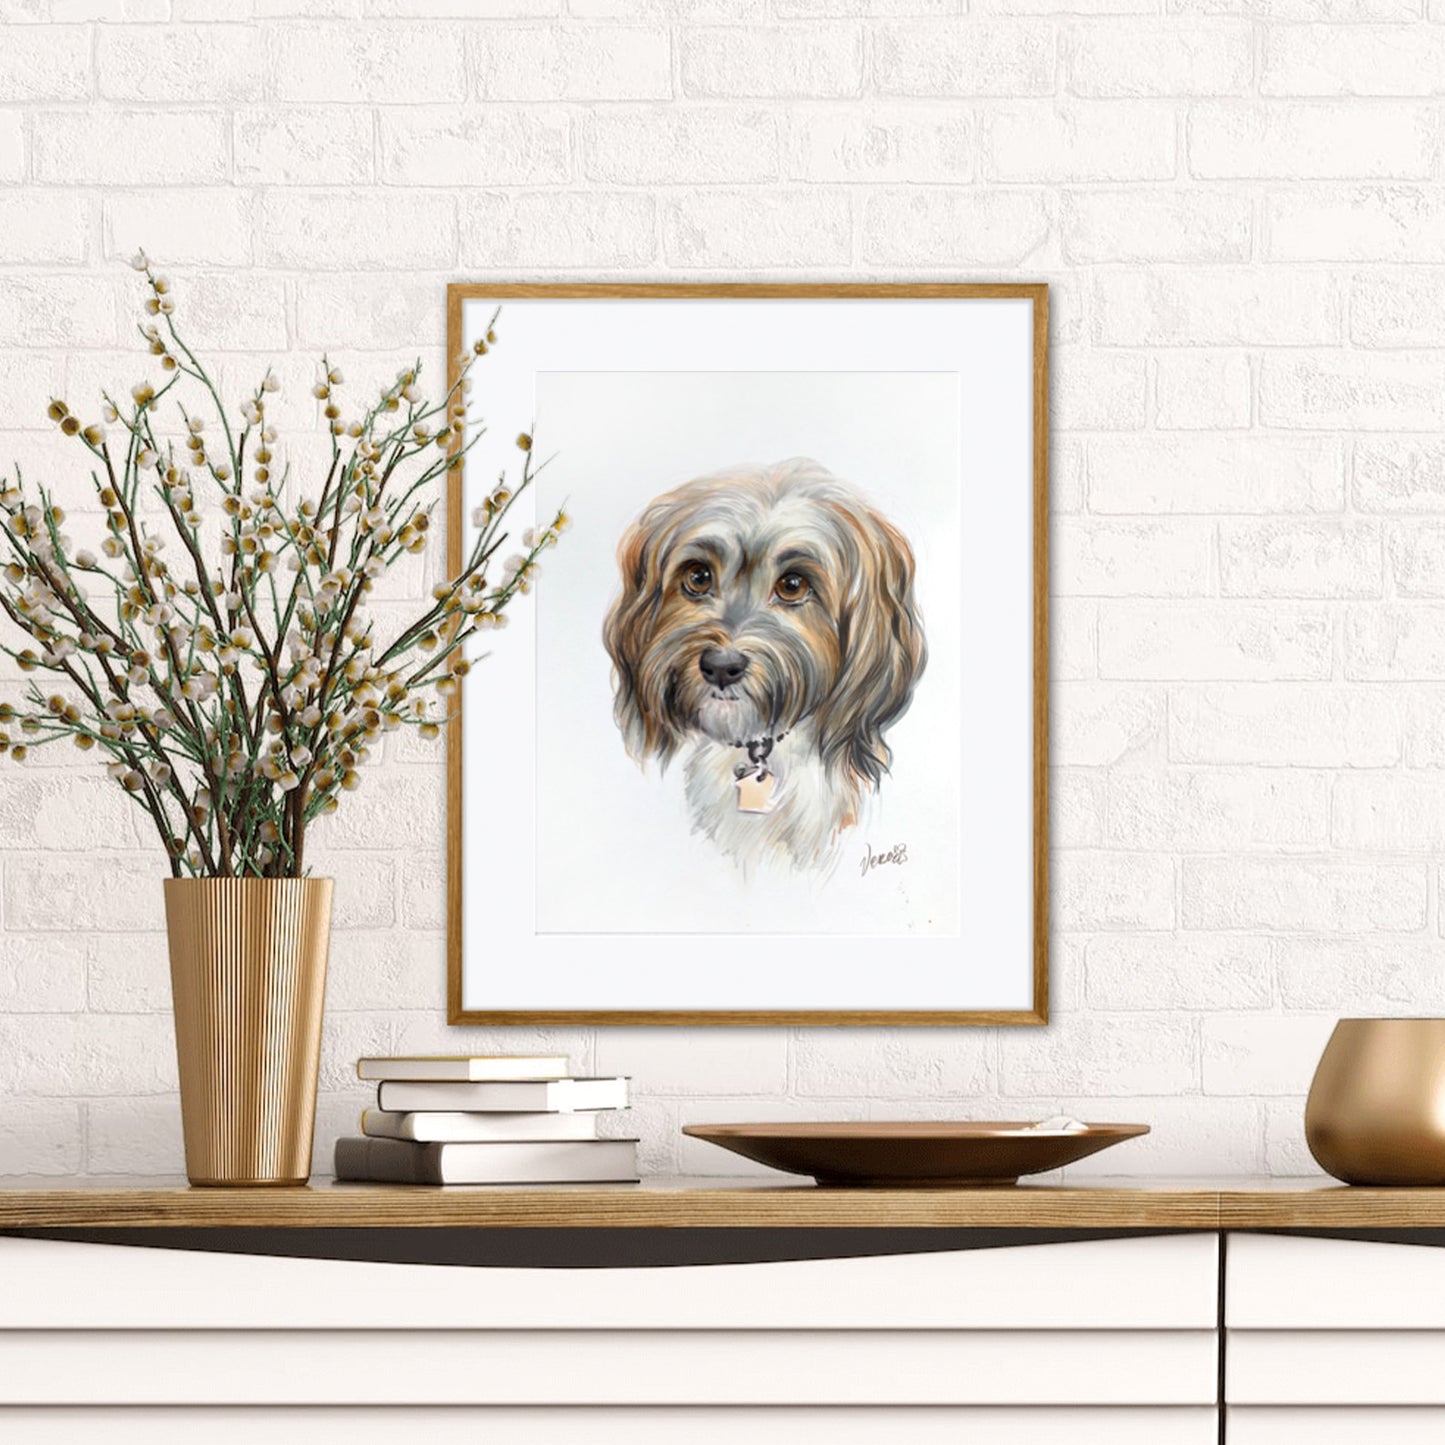 Order Custom hand-drawing dog portrait